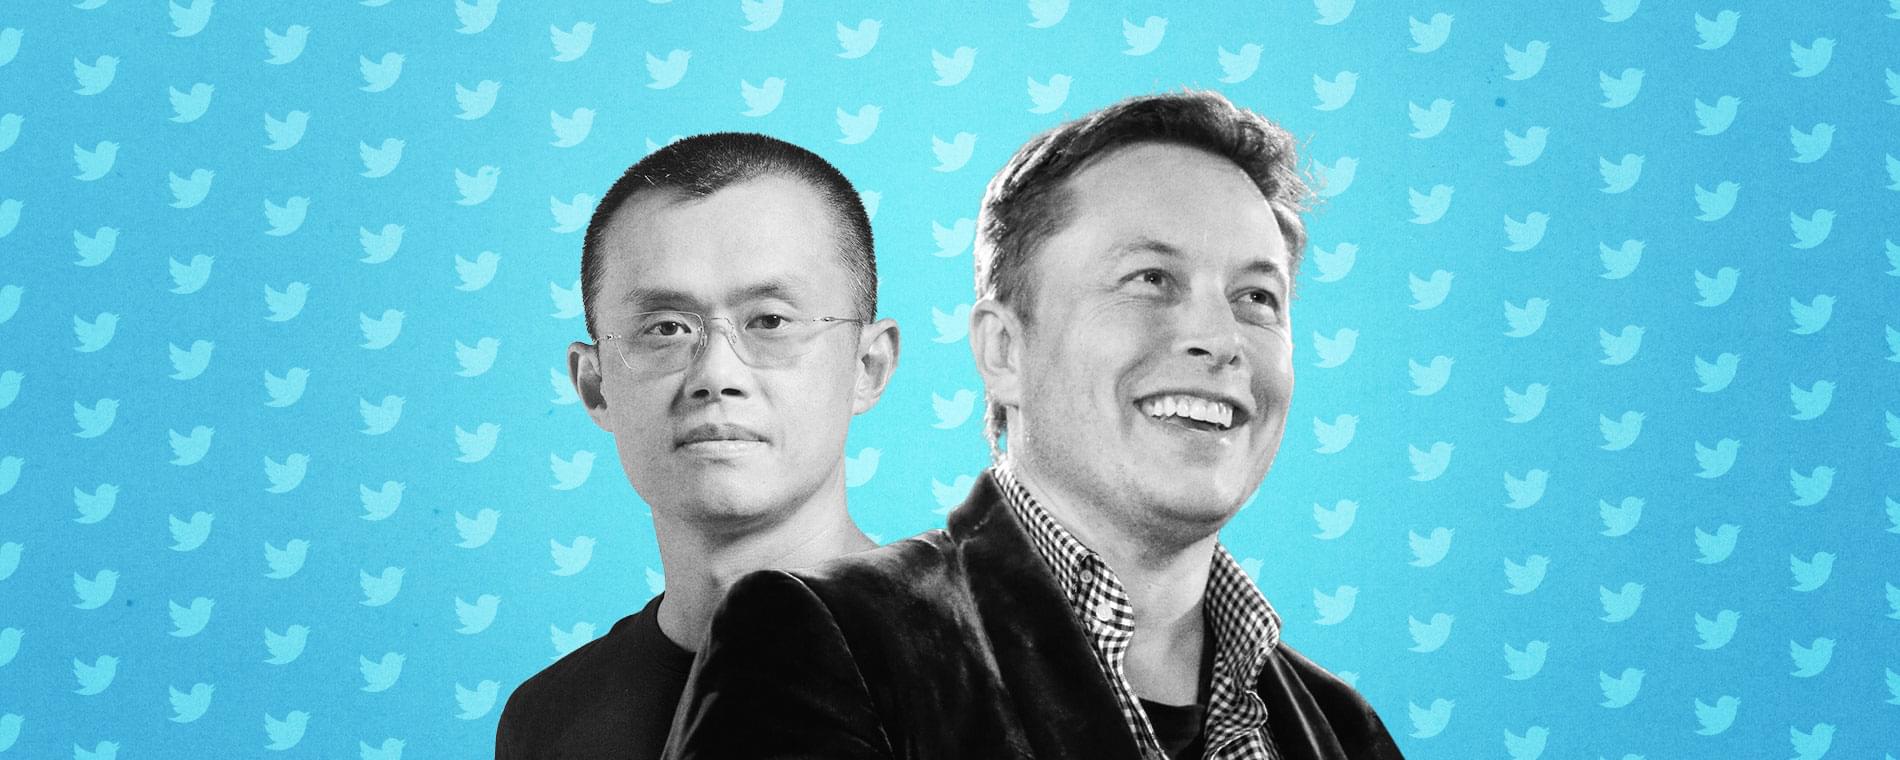 Binance joins Elon Musk in Twitter takeover